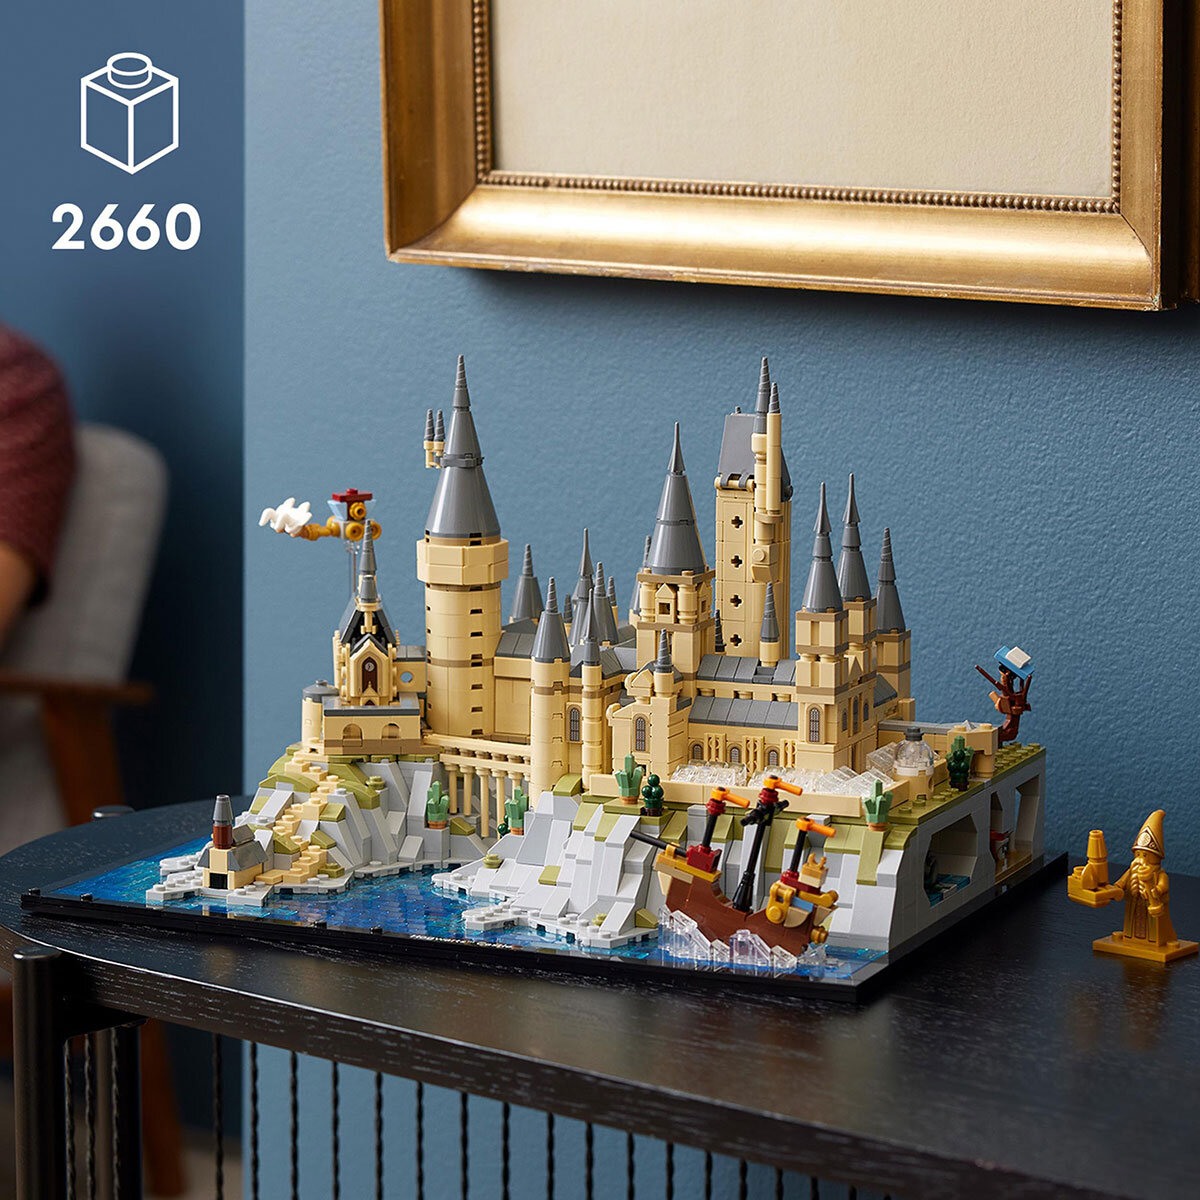 Buy LEGO Harry Potter Castle Lifestyle Image at Costco.co.uk